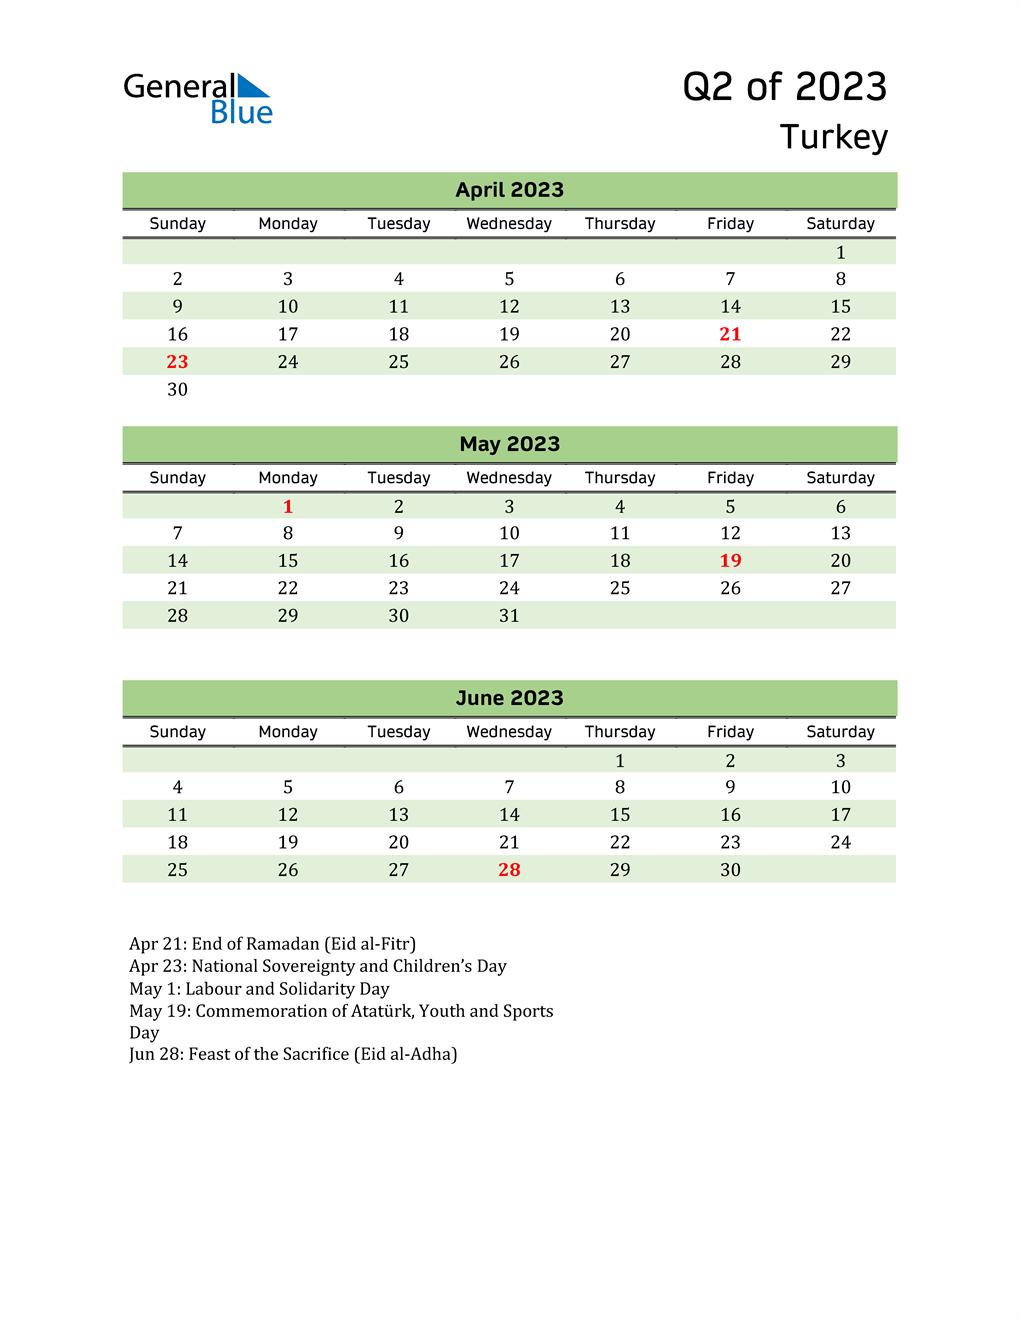 Q2 2023 Quarterly Calendar with Turkey Holidays